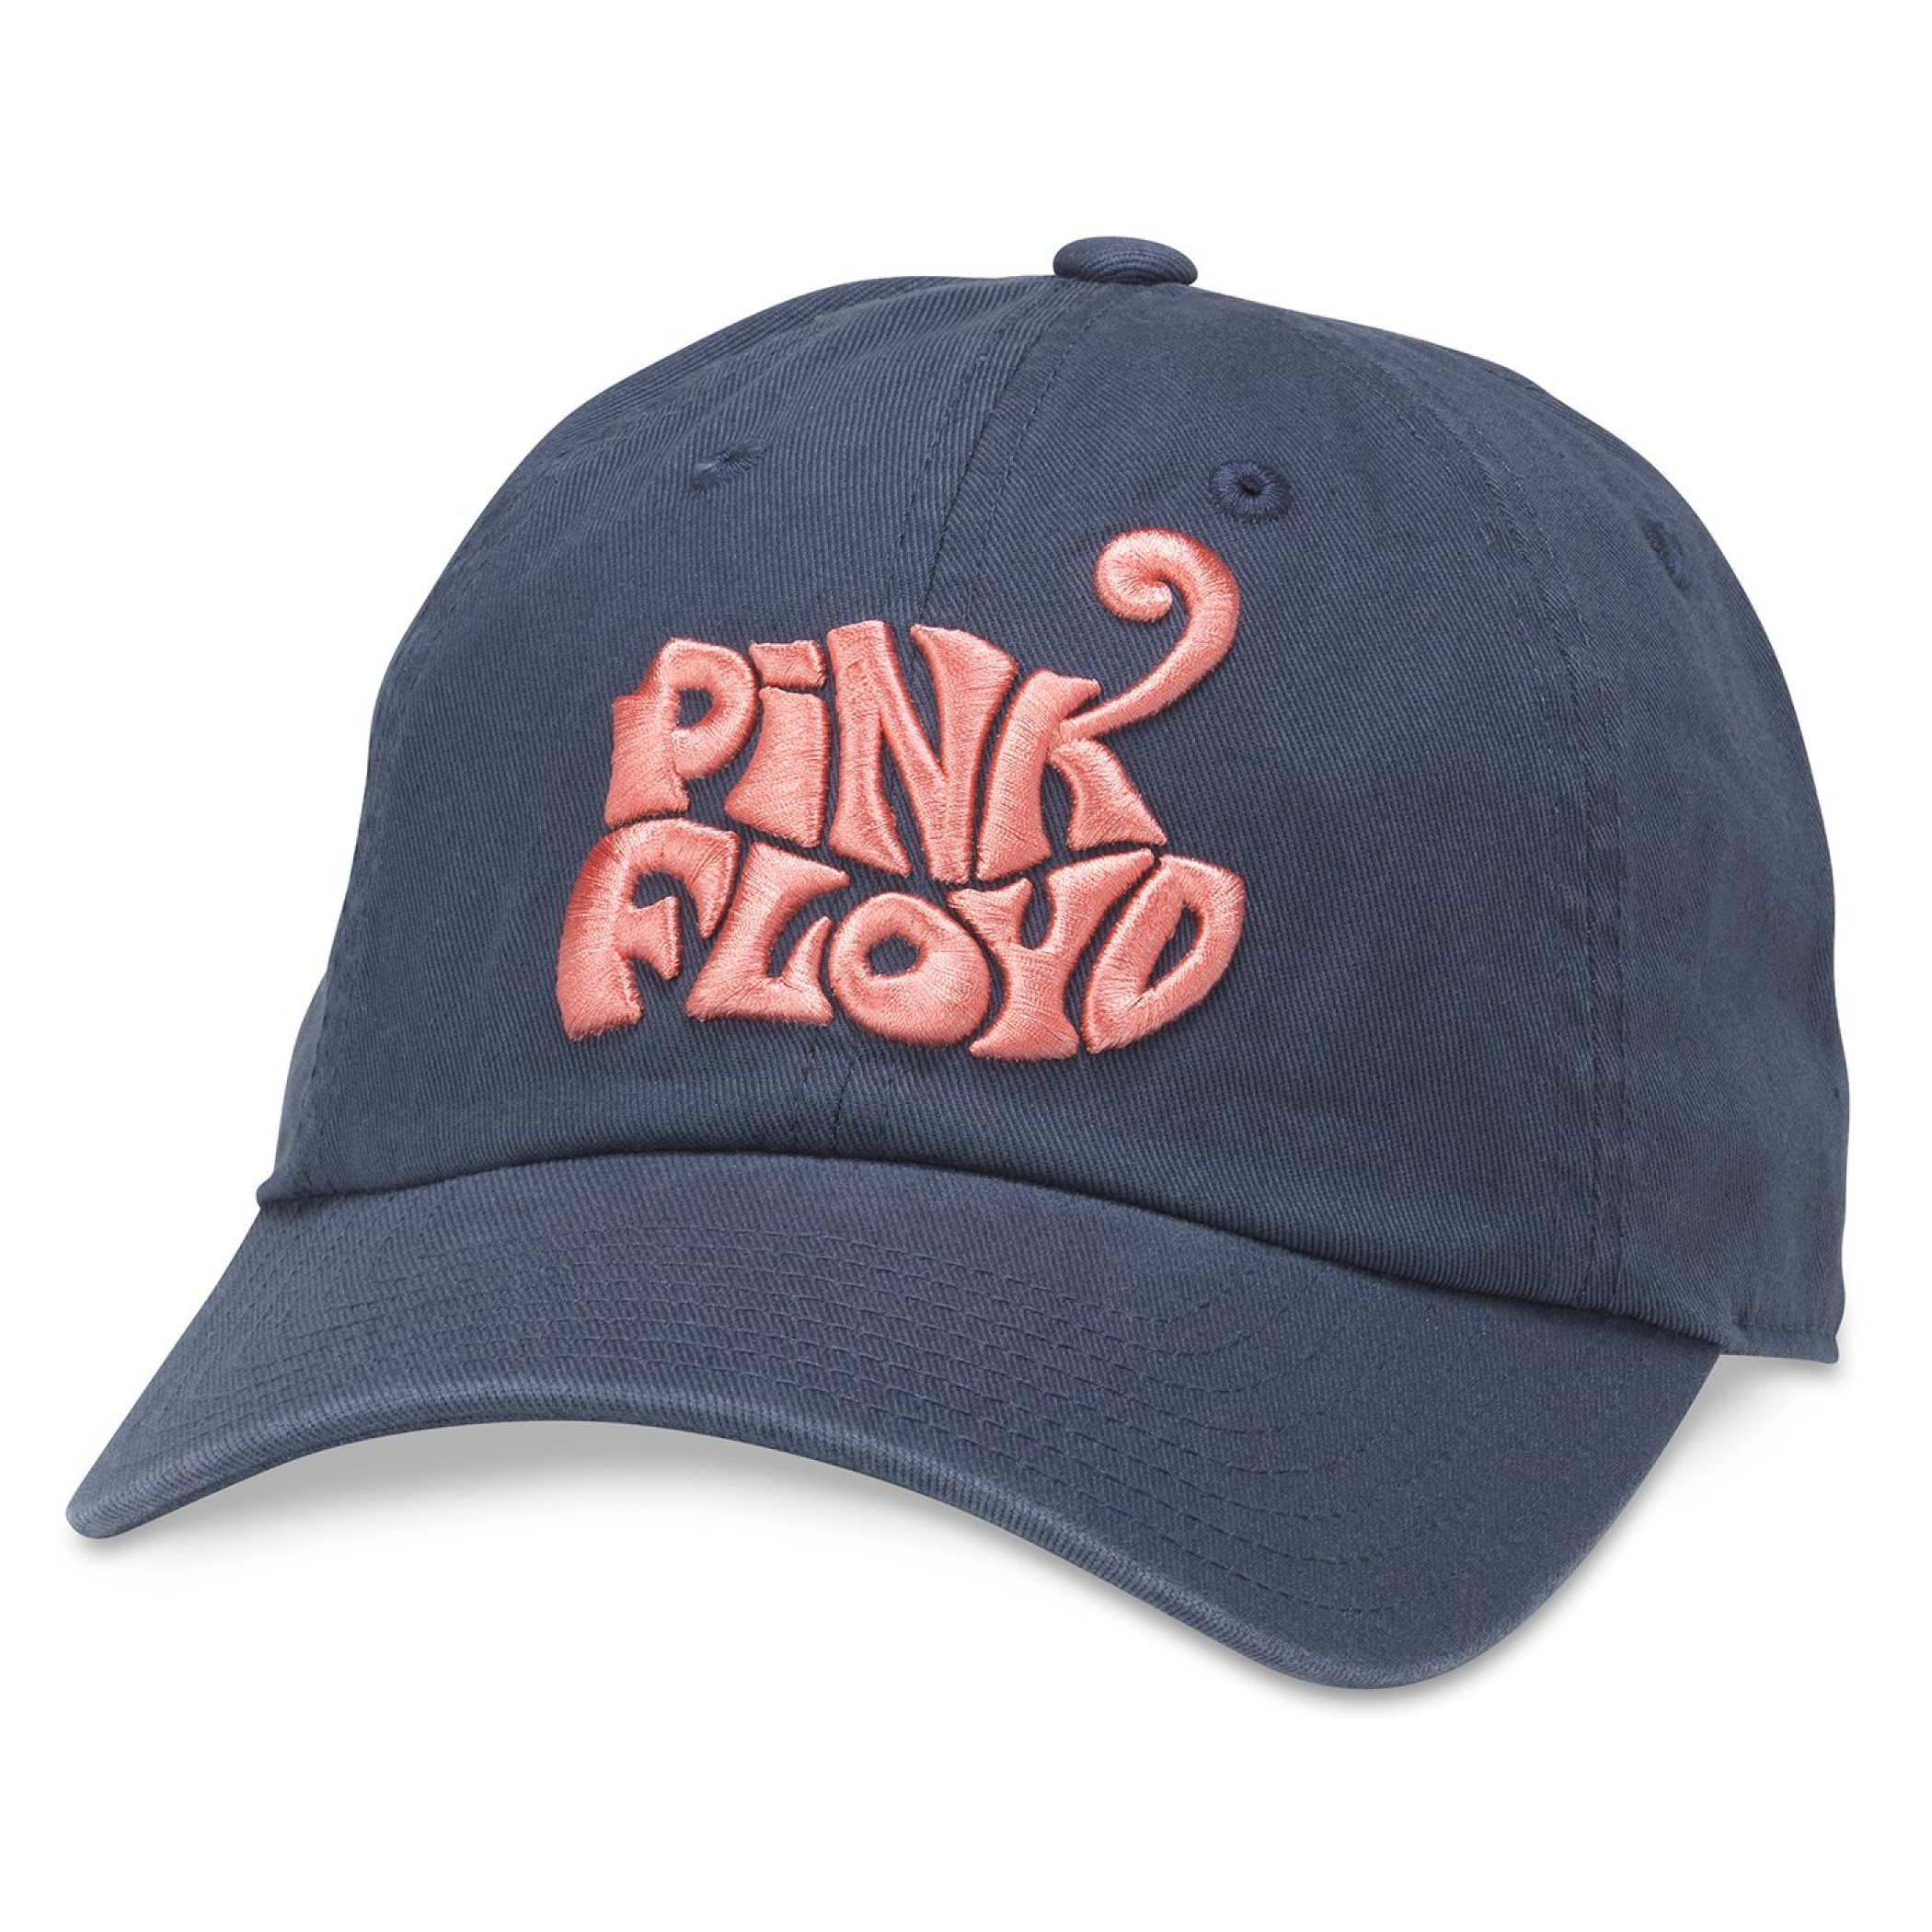 Pink Floyd Retro Style Embroidered Logo Adjustable Hat